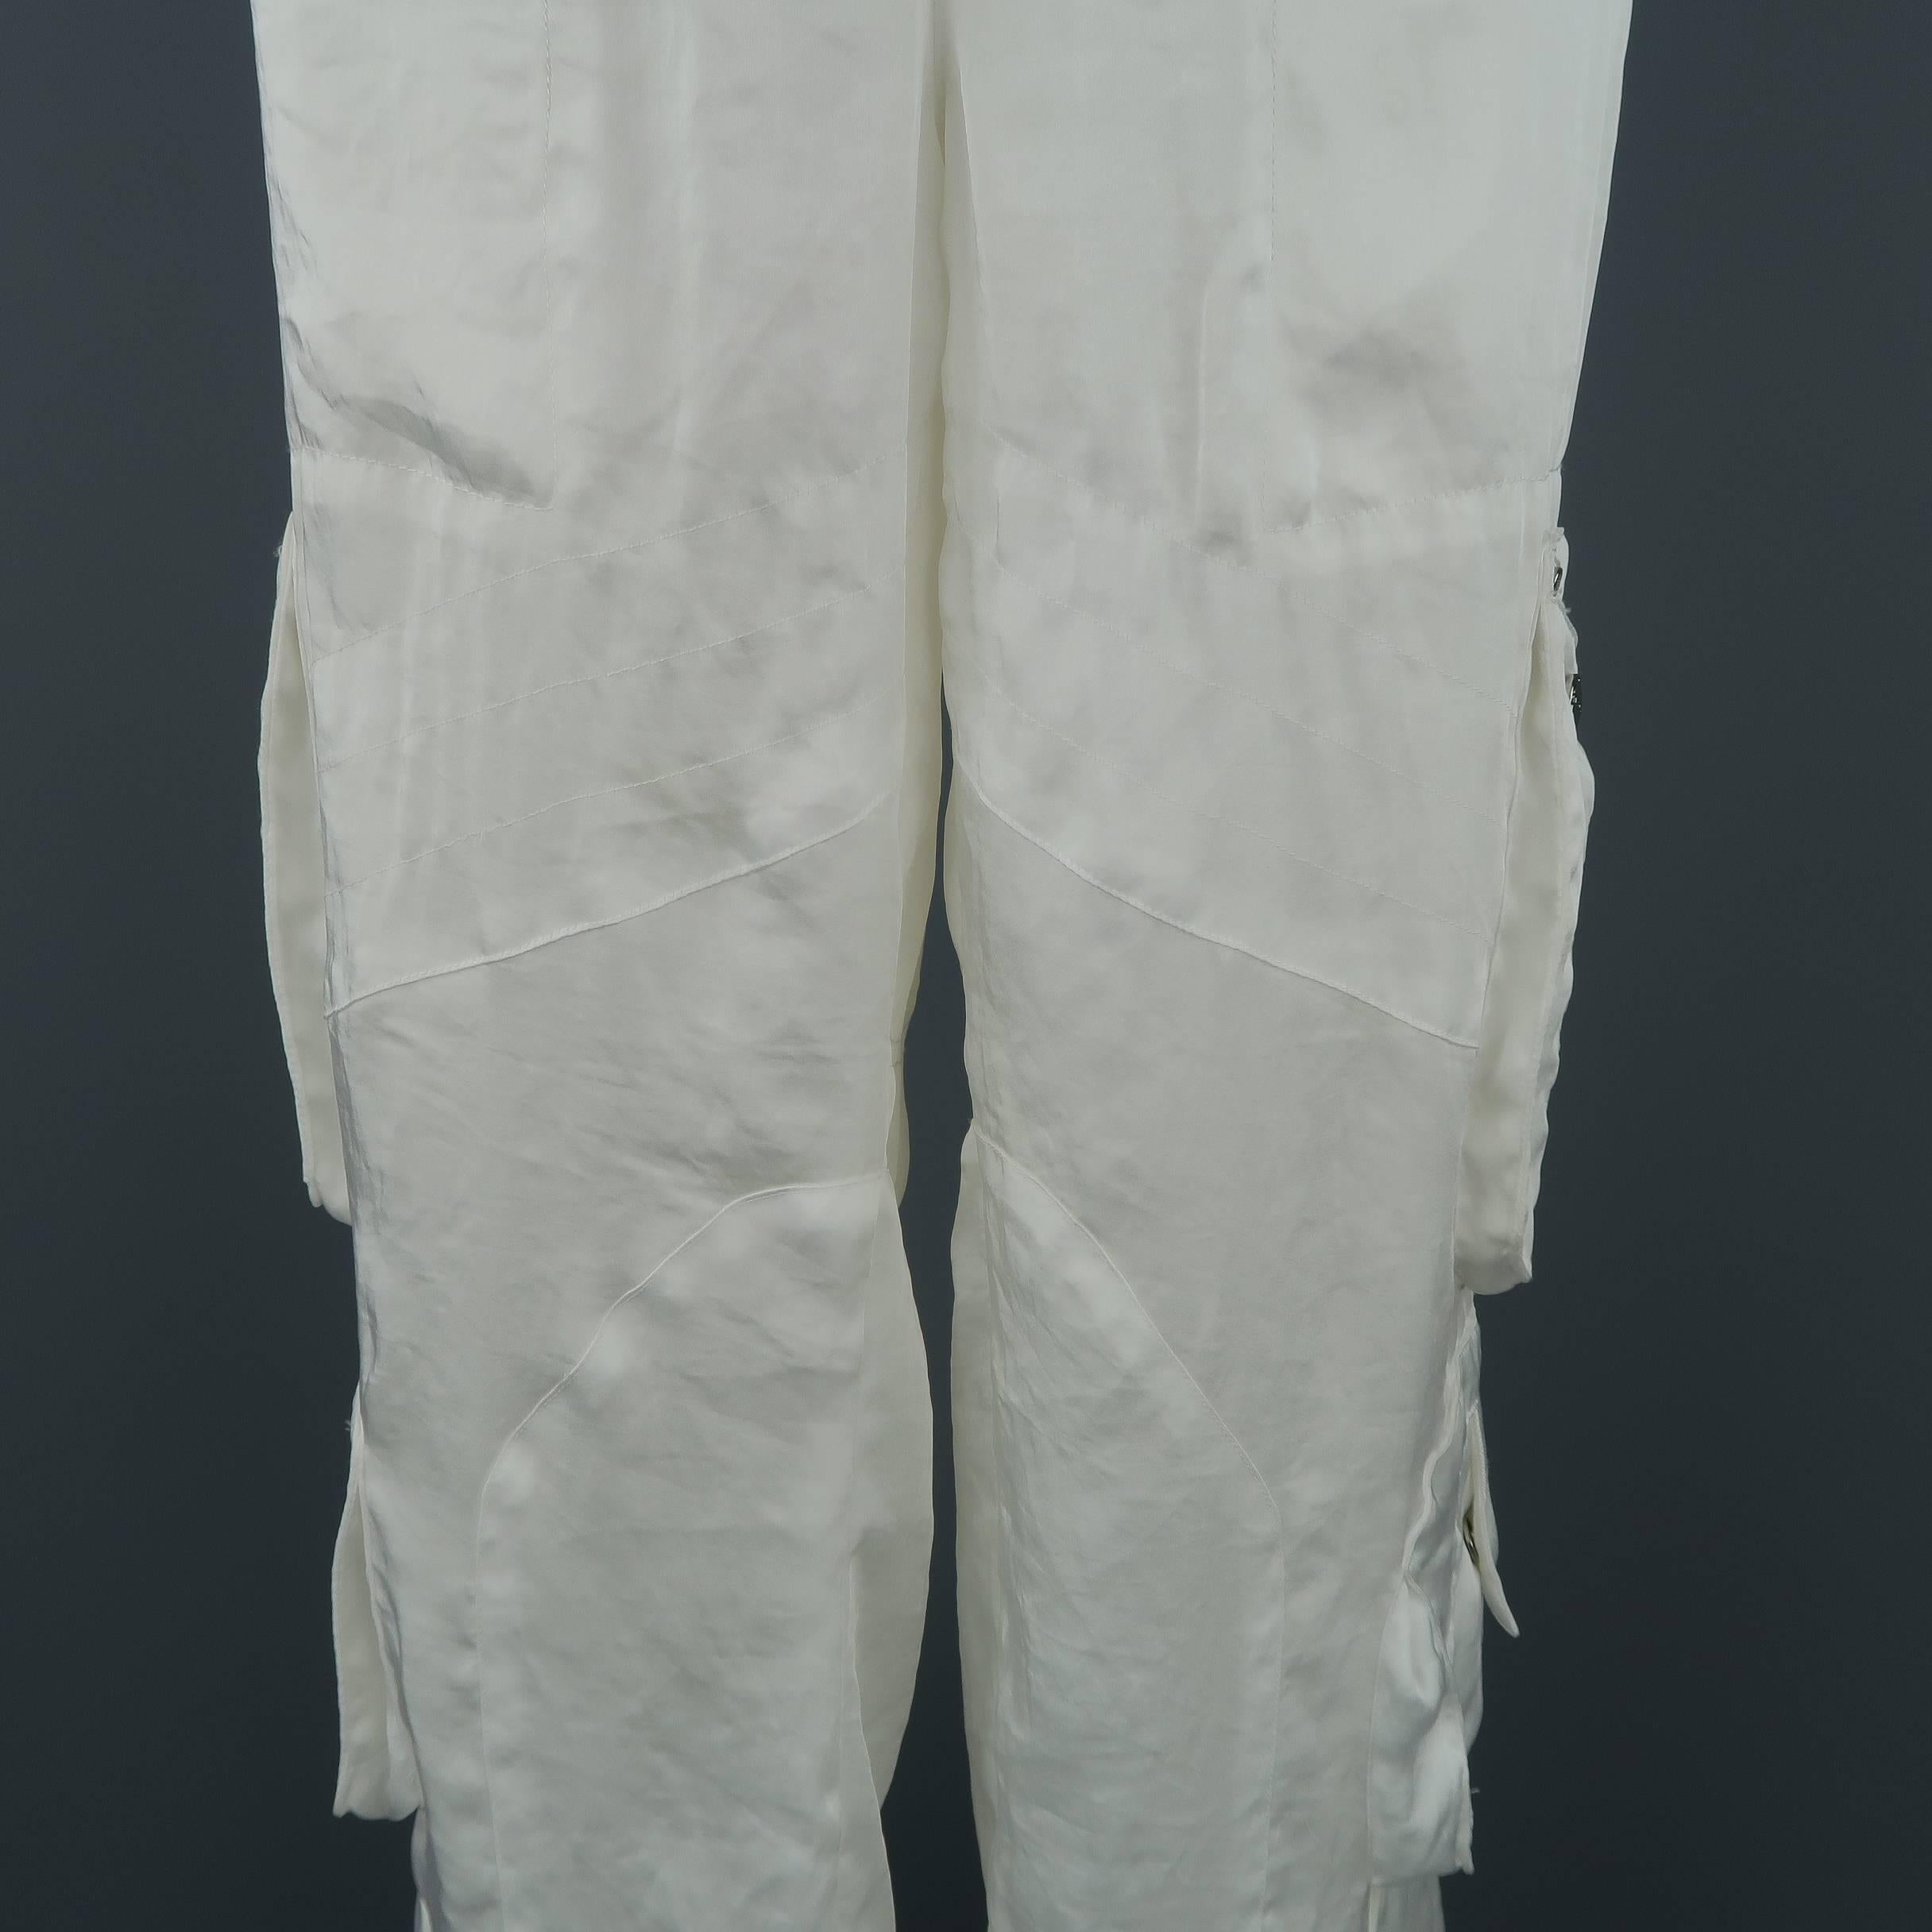 sheer white pants